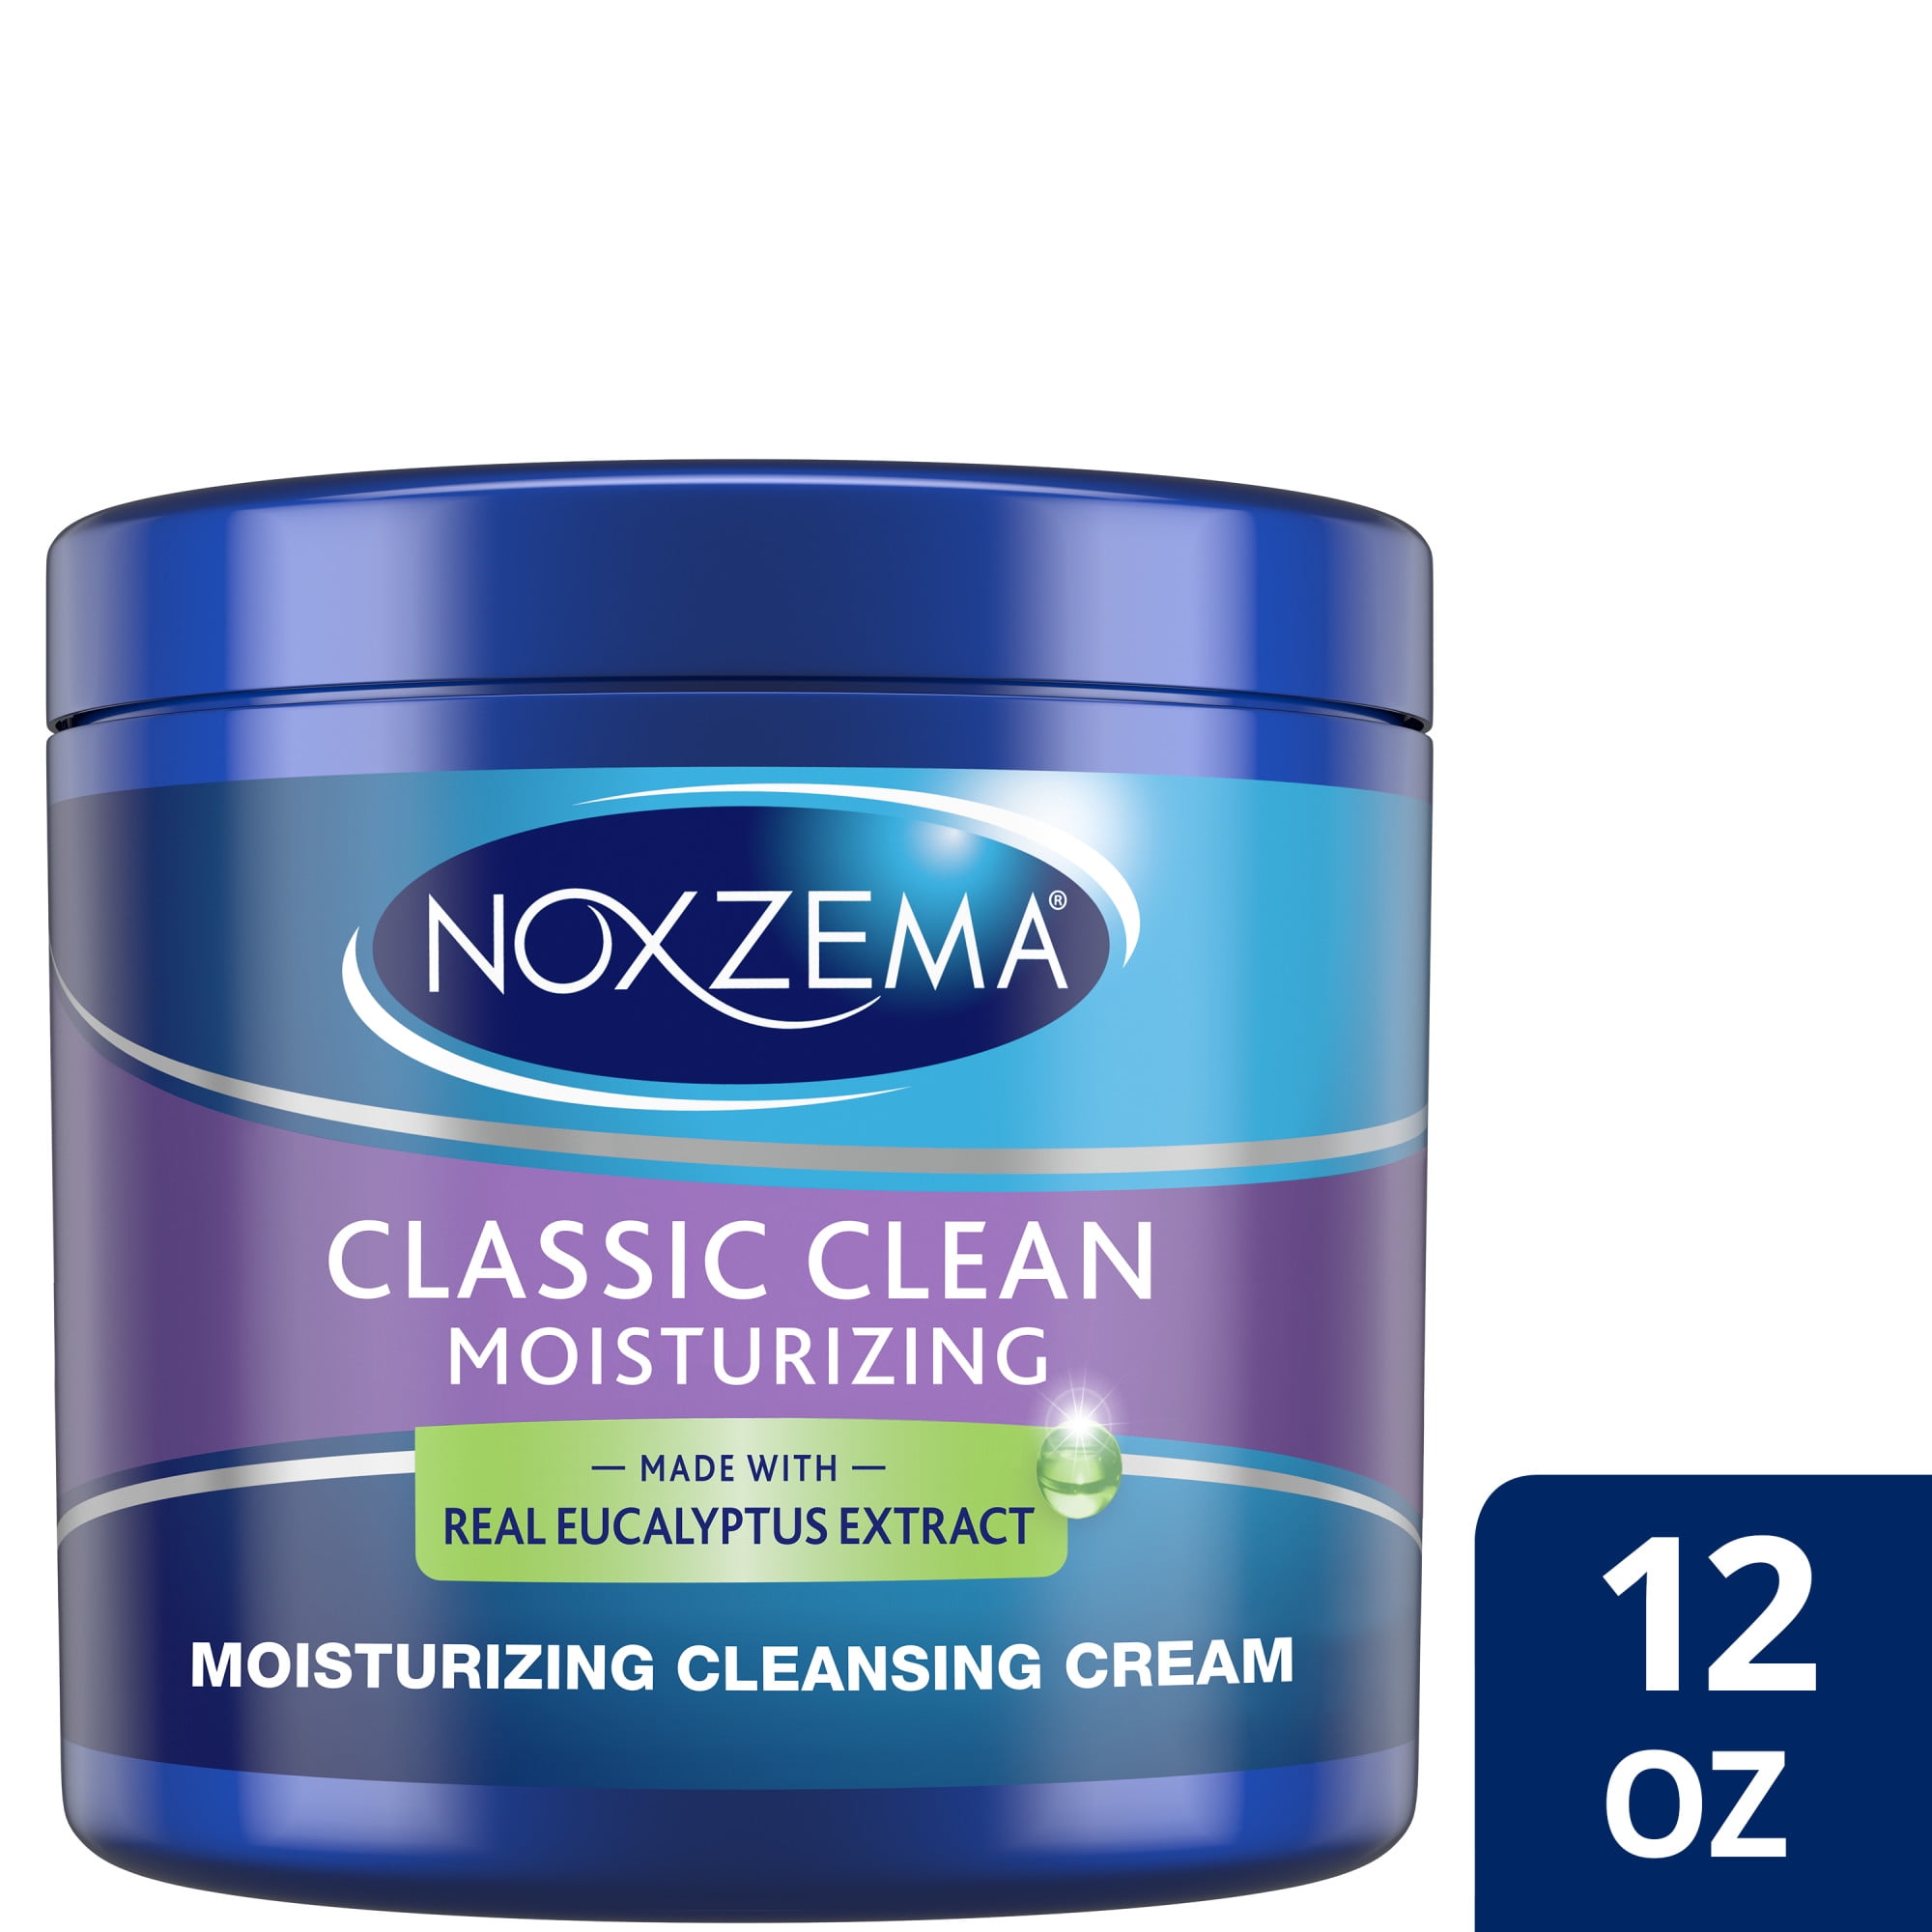 Noxzema Facial Cleanser Moisturizing Cleansing Classic Clean, 12 oz